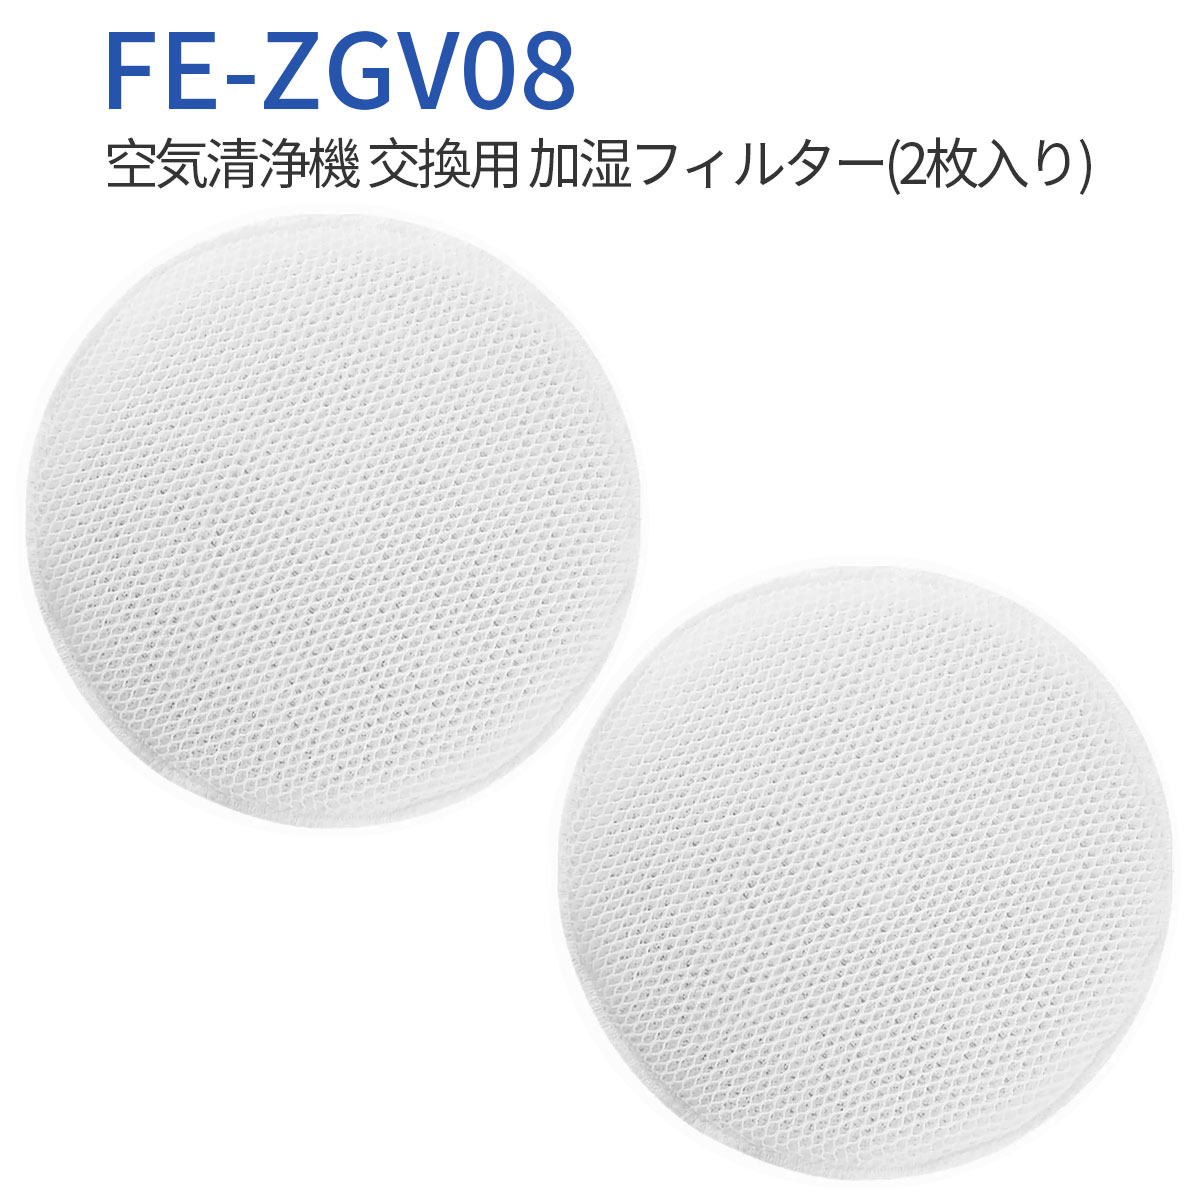 FE-ZGV08 加湿フィルター fe-zgv08 パナソニック加湿空気清浄機 交換用 フィルター（2枚入り）純正品ではなく互換品です